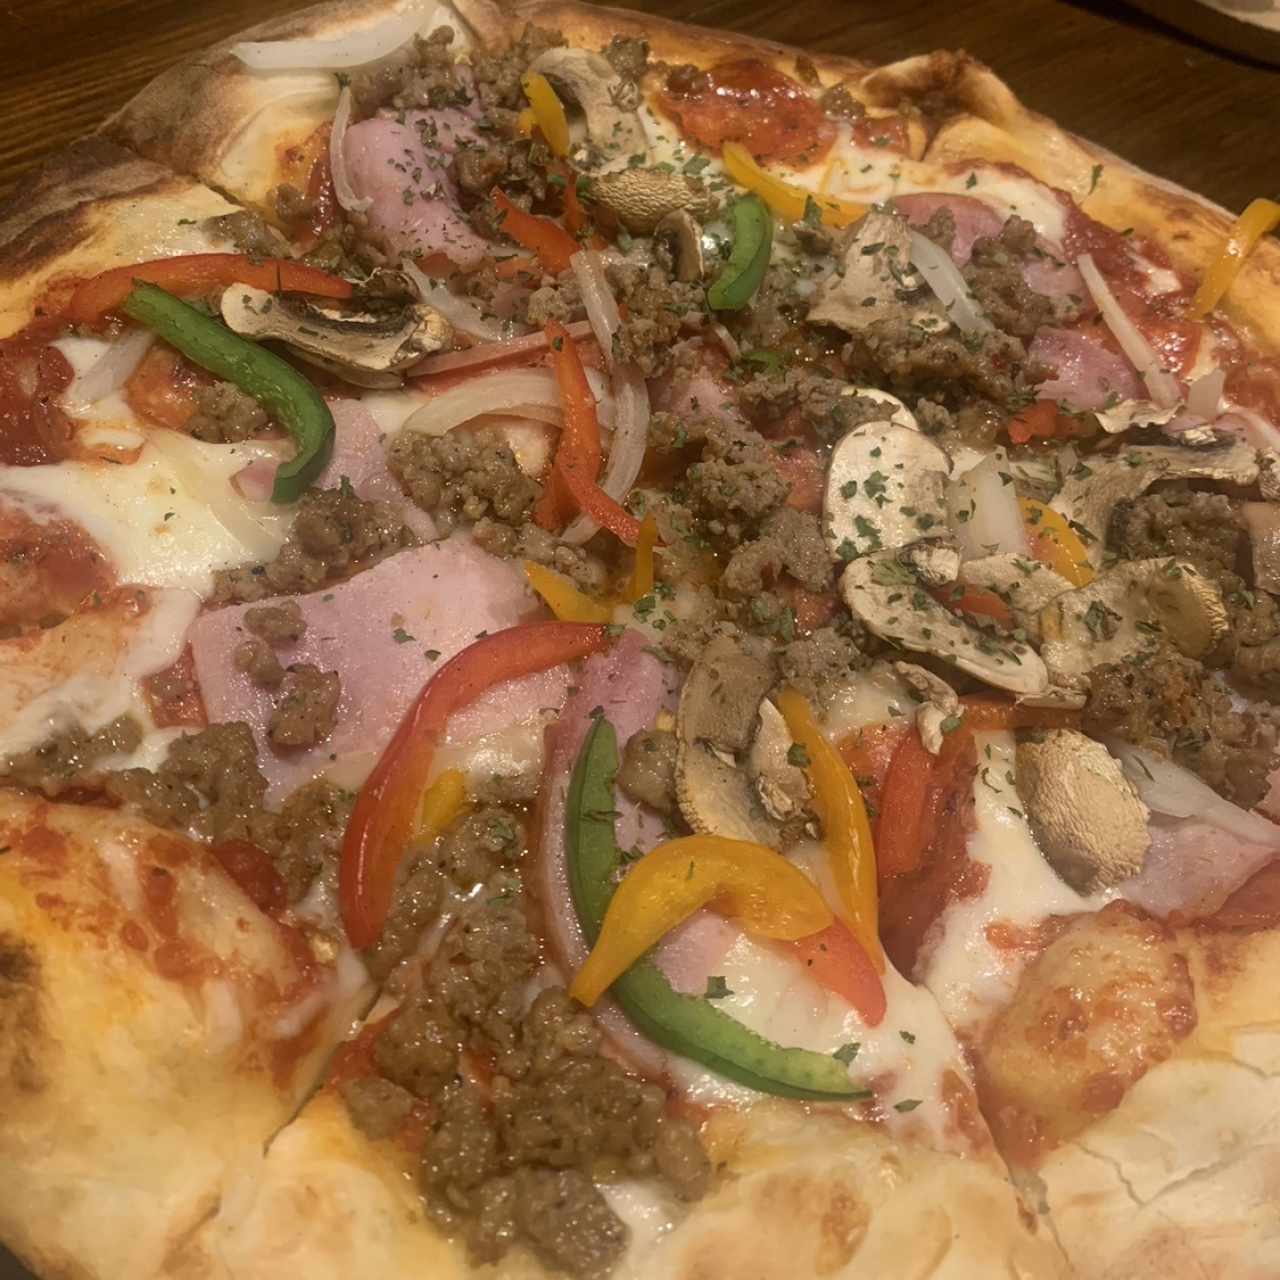 Pizzas - Combination